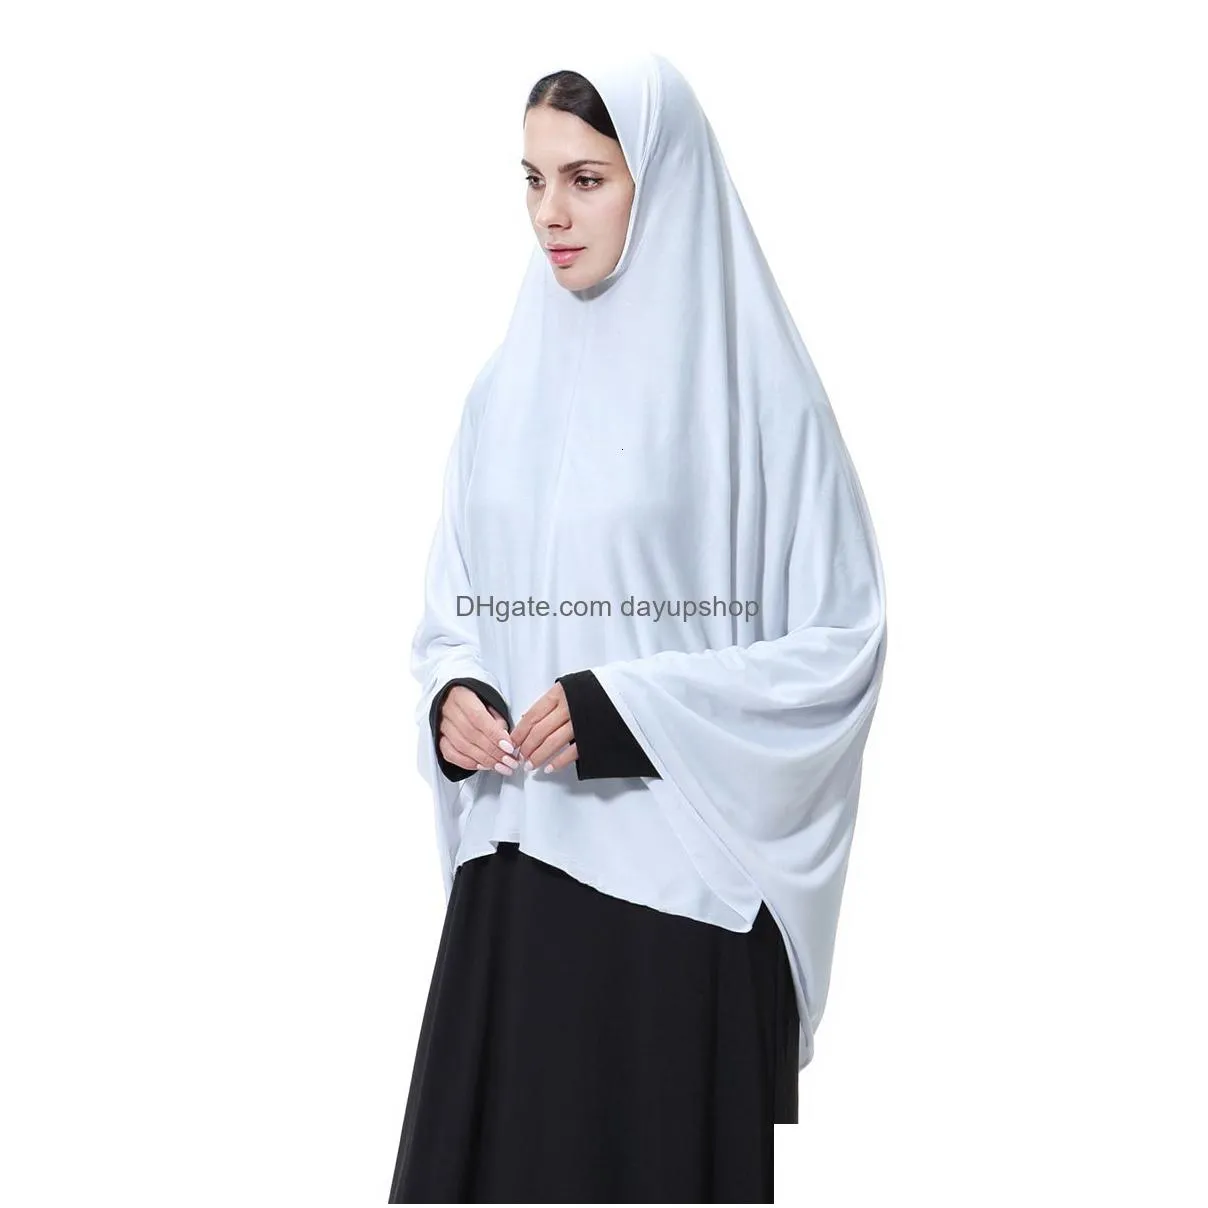 hijabs women prayer clothing black arabian long muslim hijab hat islamic inner cap wrap headwear coverings malaysia hijab headscarf